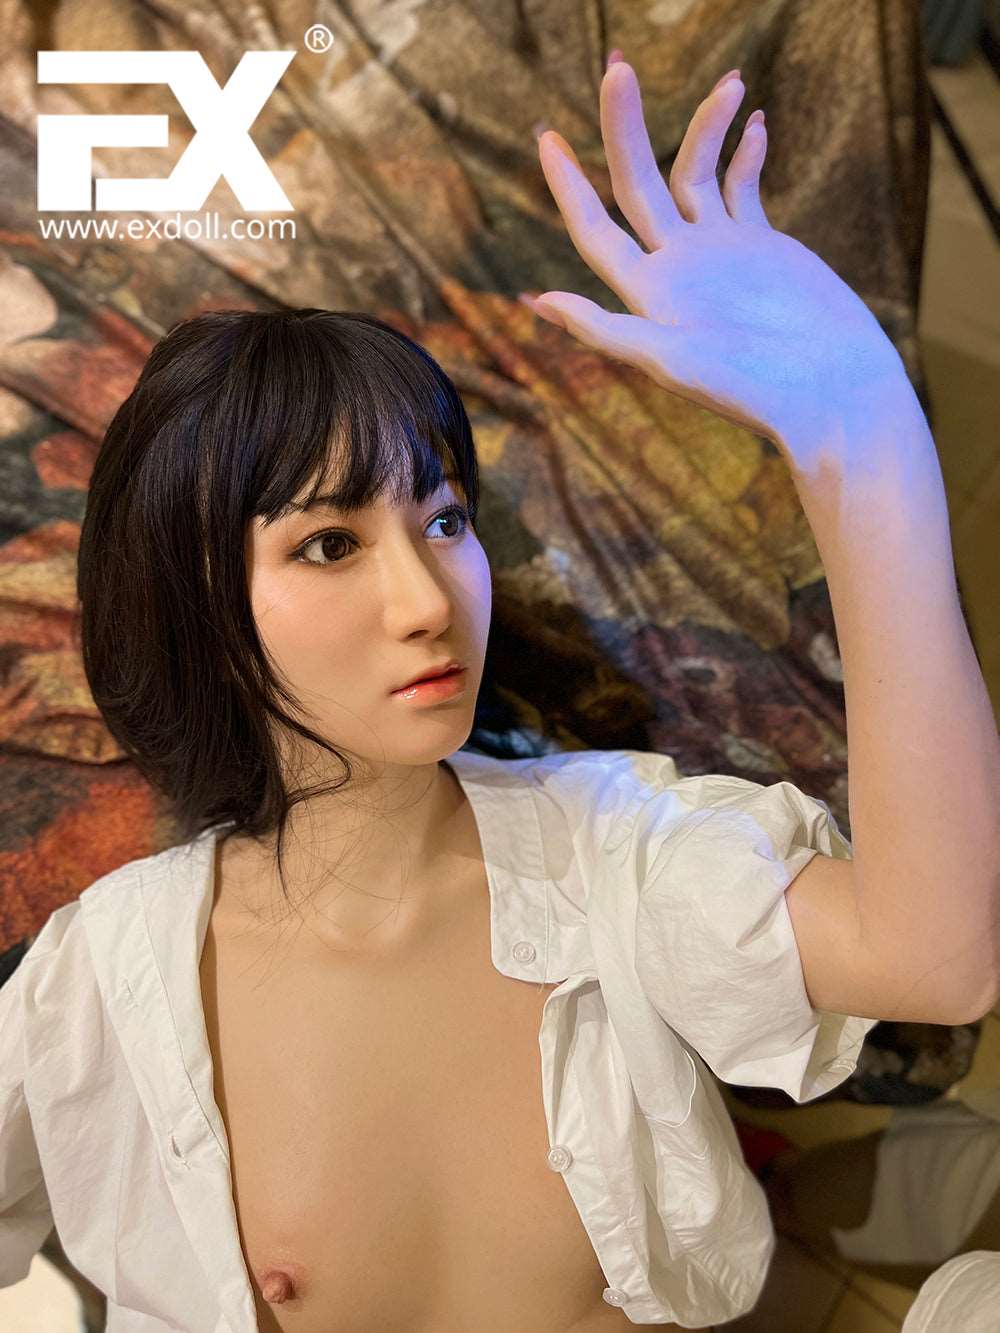 EX Doll Clone Series 160 cm A Silicone - Chun Yi | Sex Dolls SG